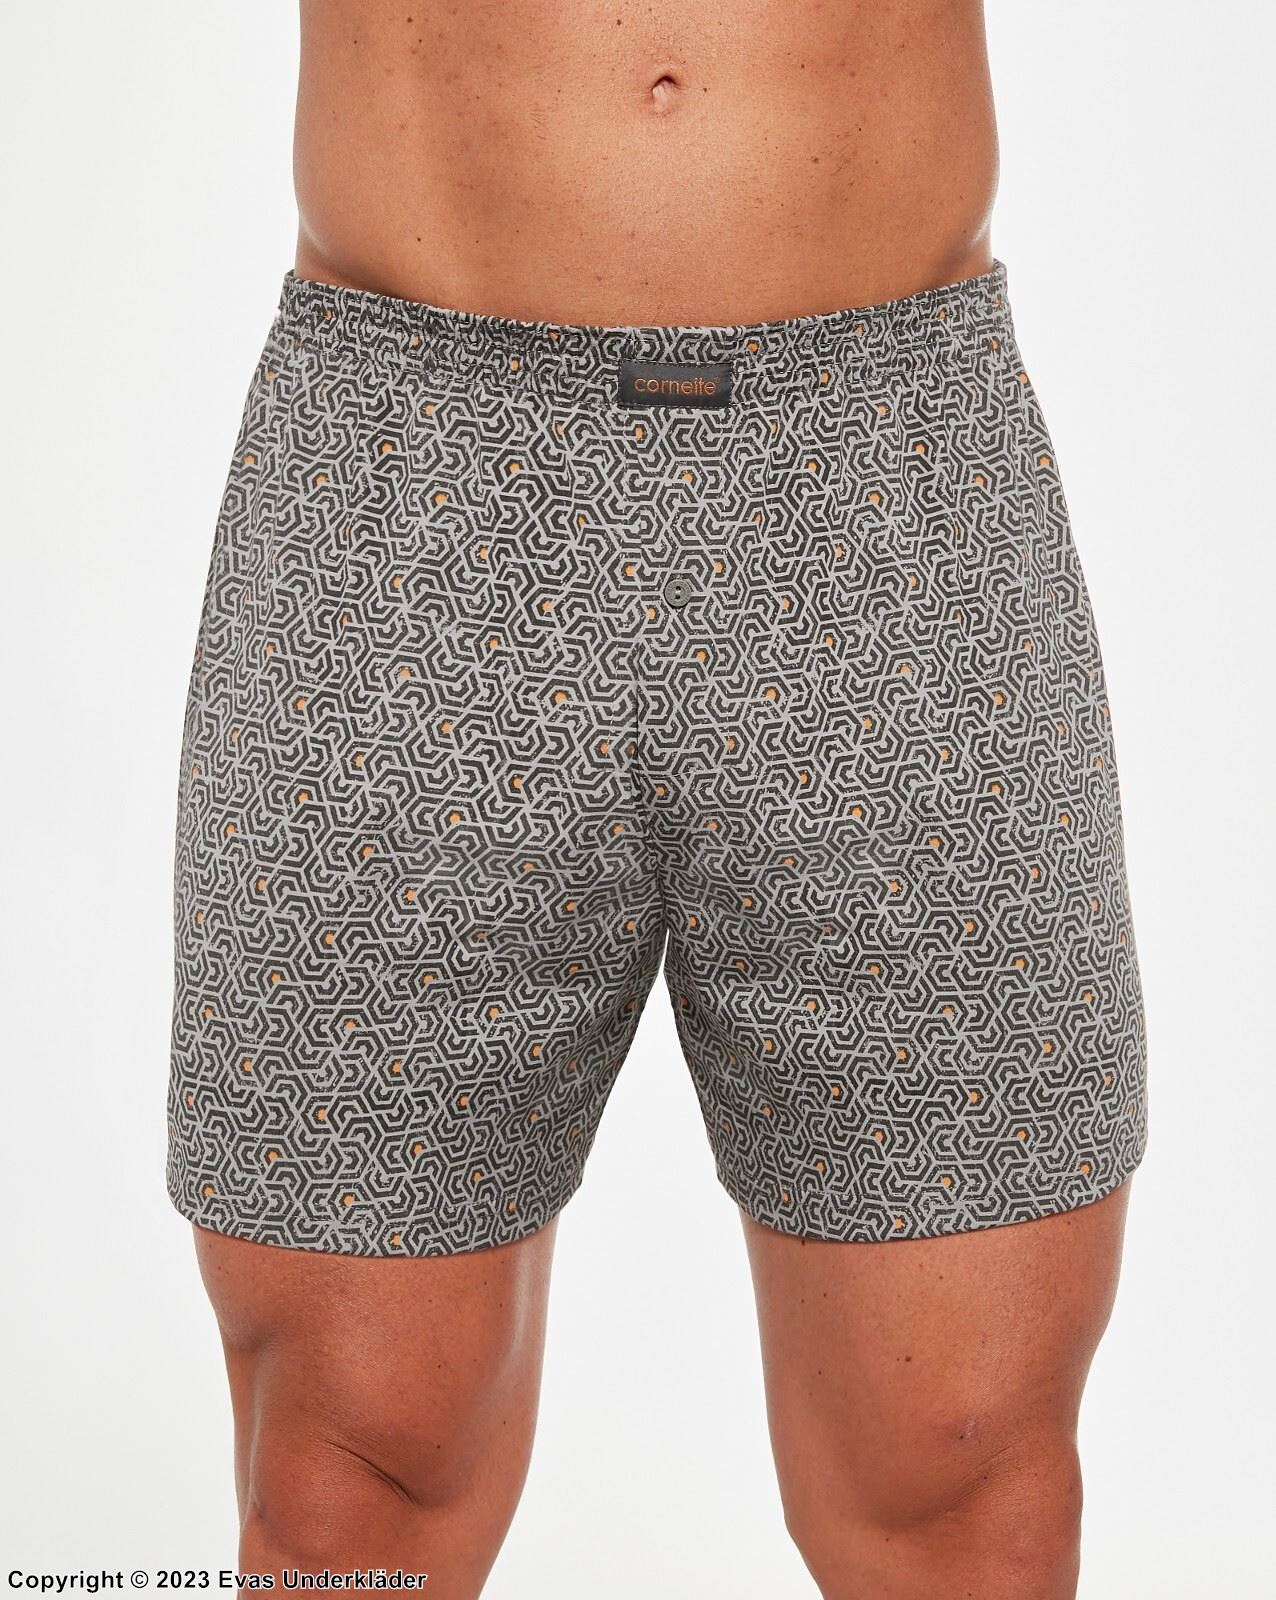 Men's boxer shorts, high quality cotton, intricate pattern